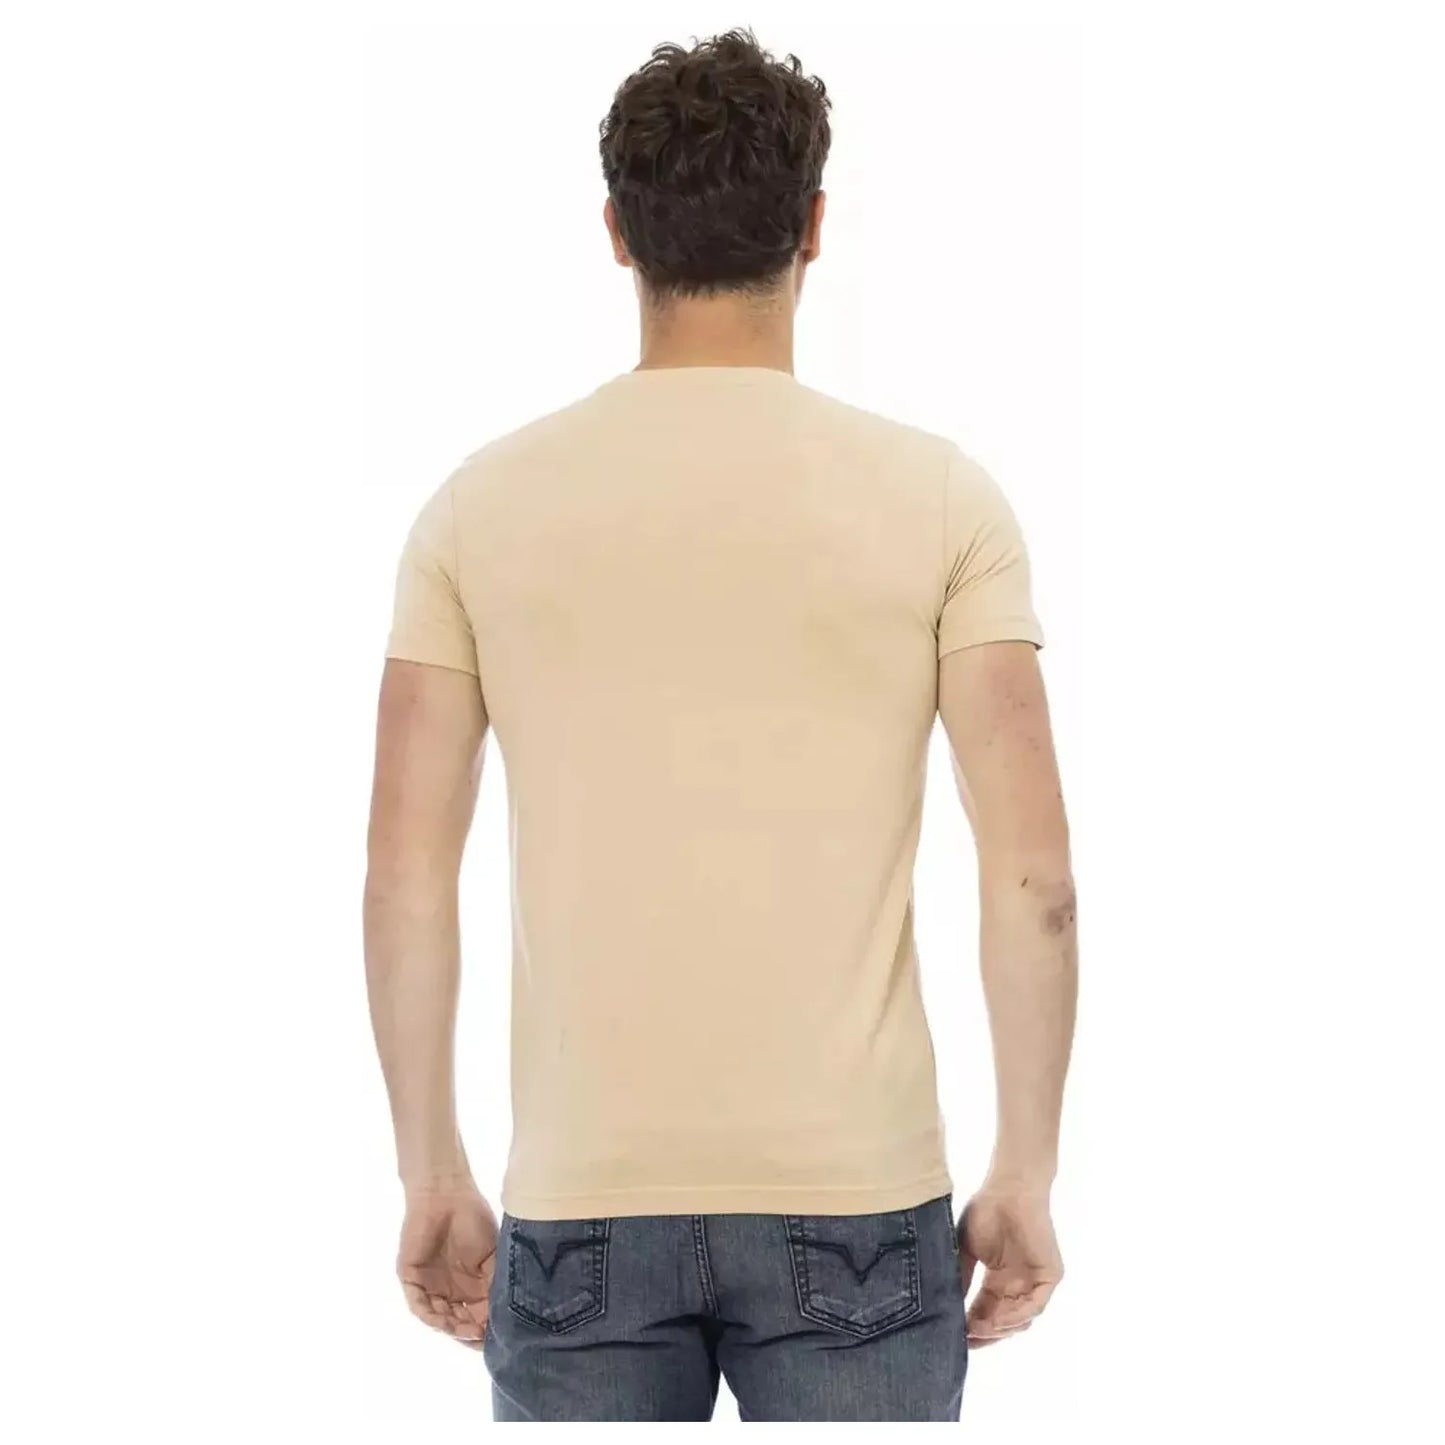 Trussardi Action Beige Short Sleeve Tee with Sleek Print beige-cotton-t-shirt-11